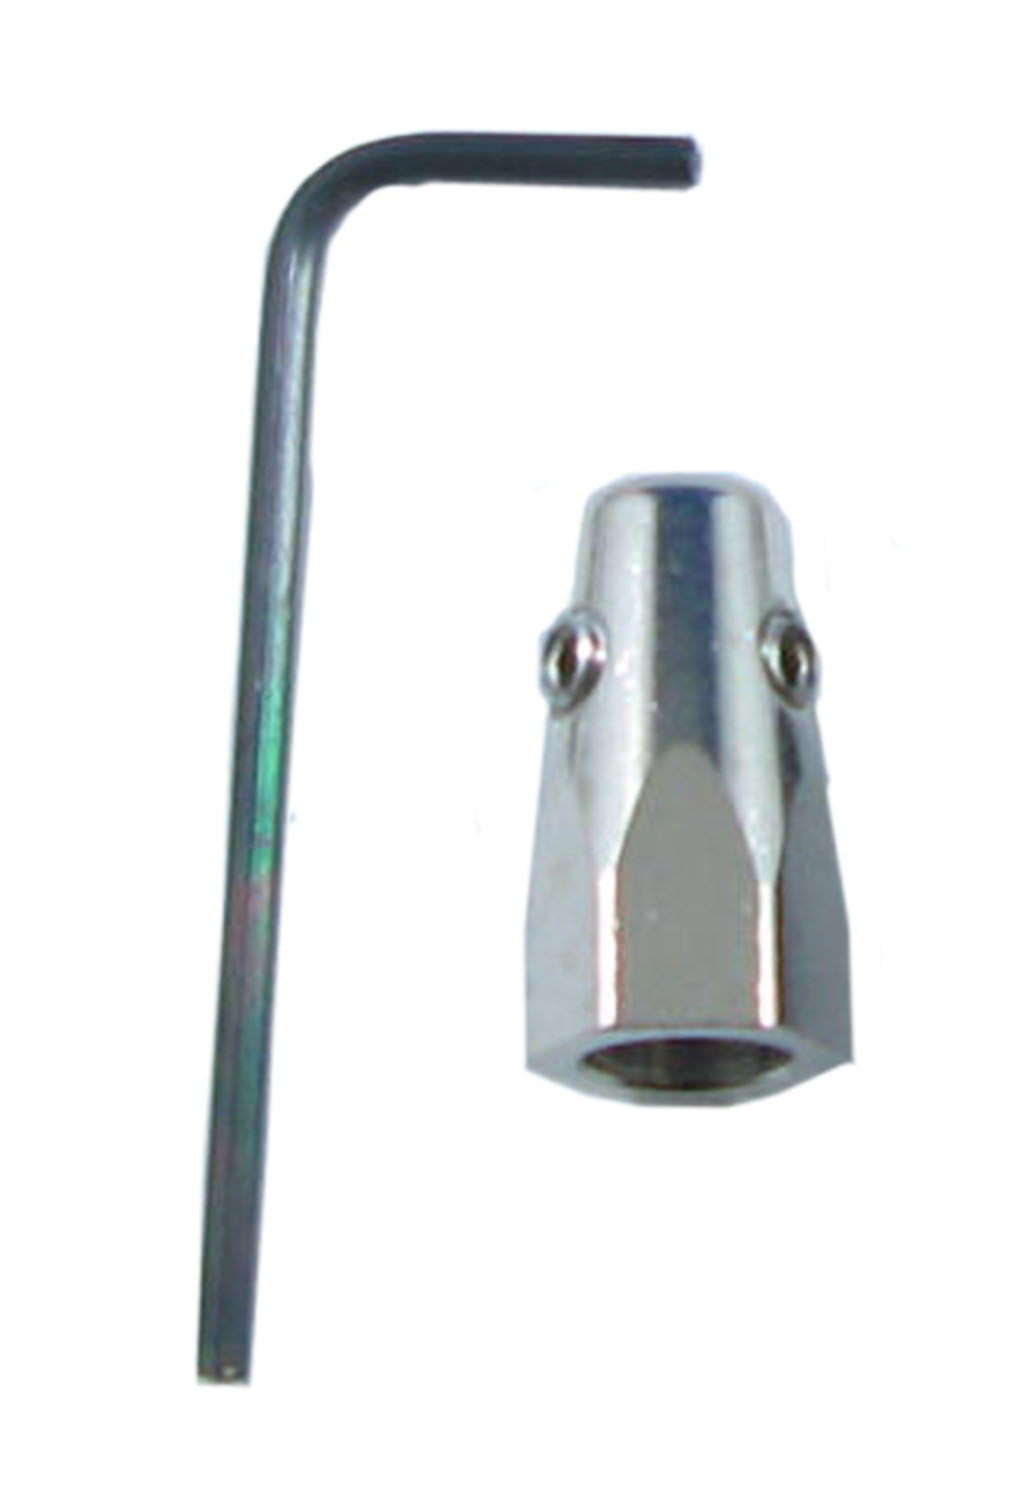 Larsen - Antenna Cone Adapter With .100" Diameter Hole & Allen Wrench